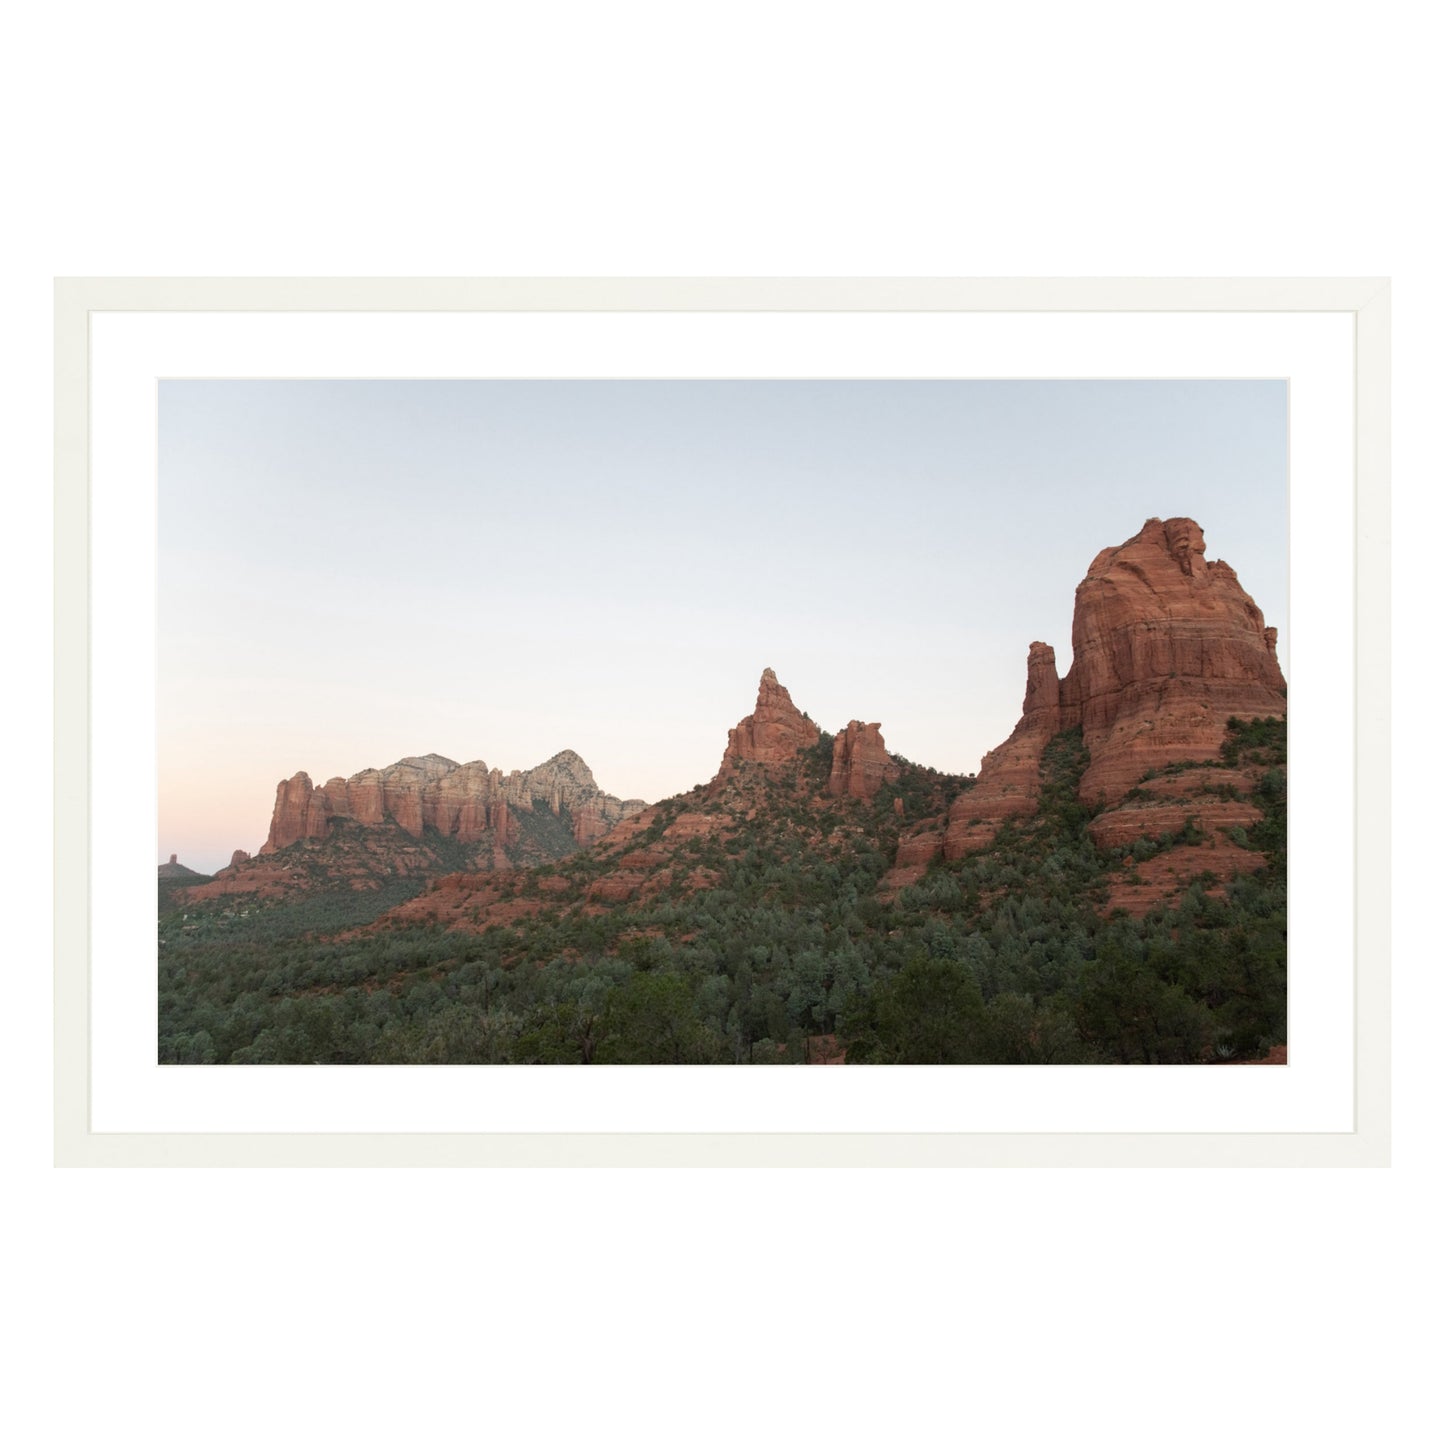 Photograph of Boynton Canyon in Sedona Arizona framed in white with white mat